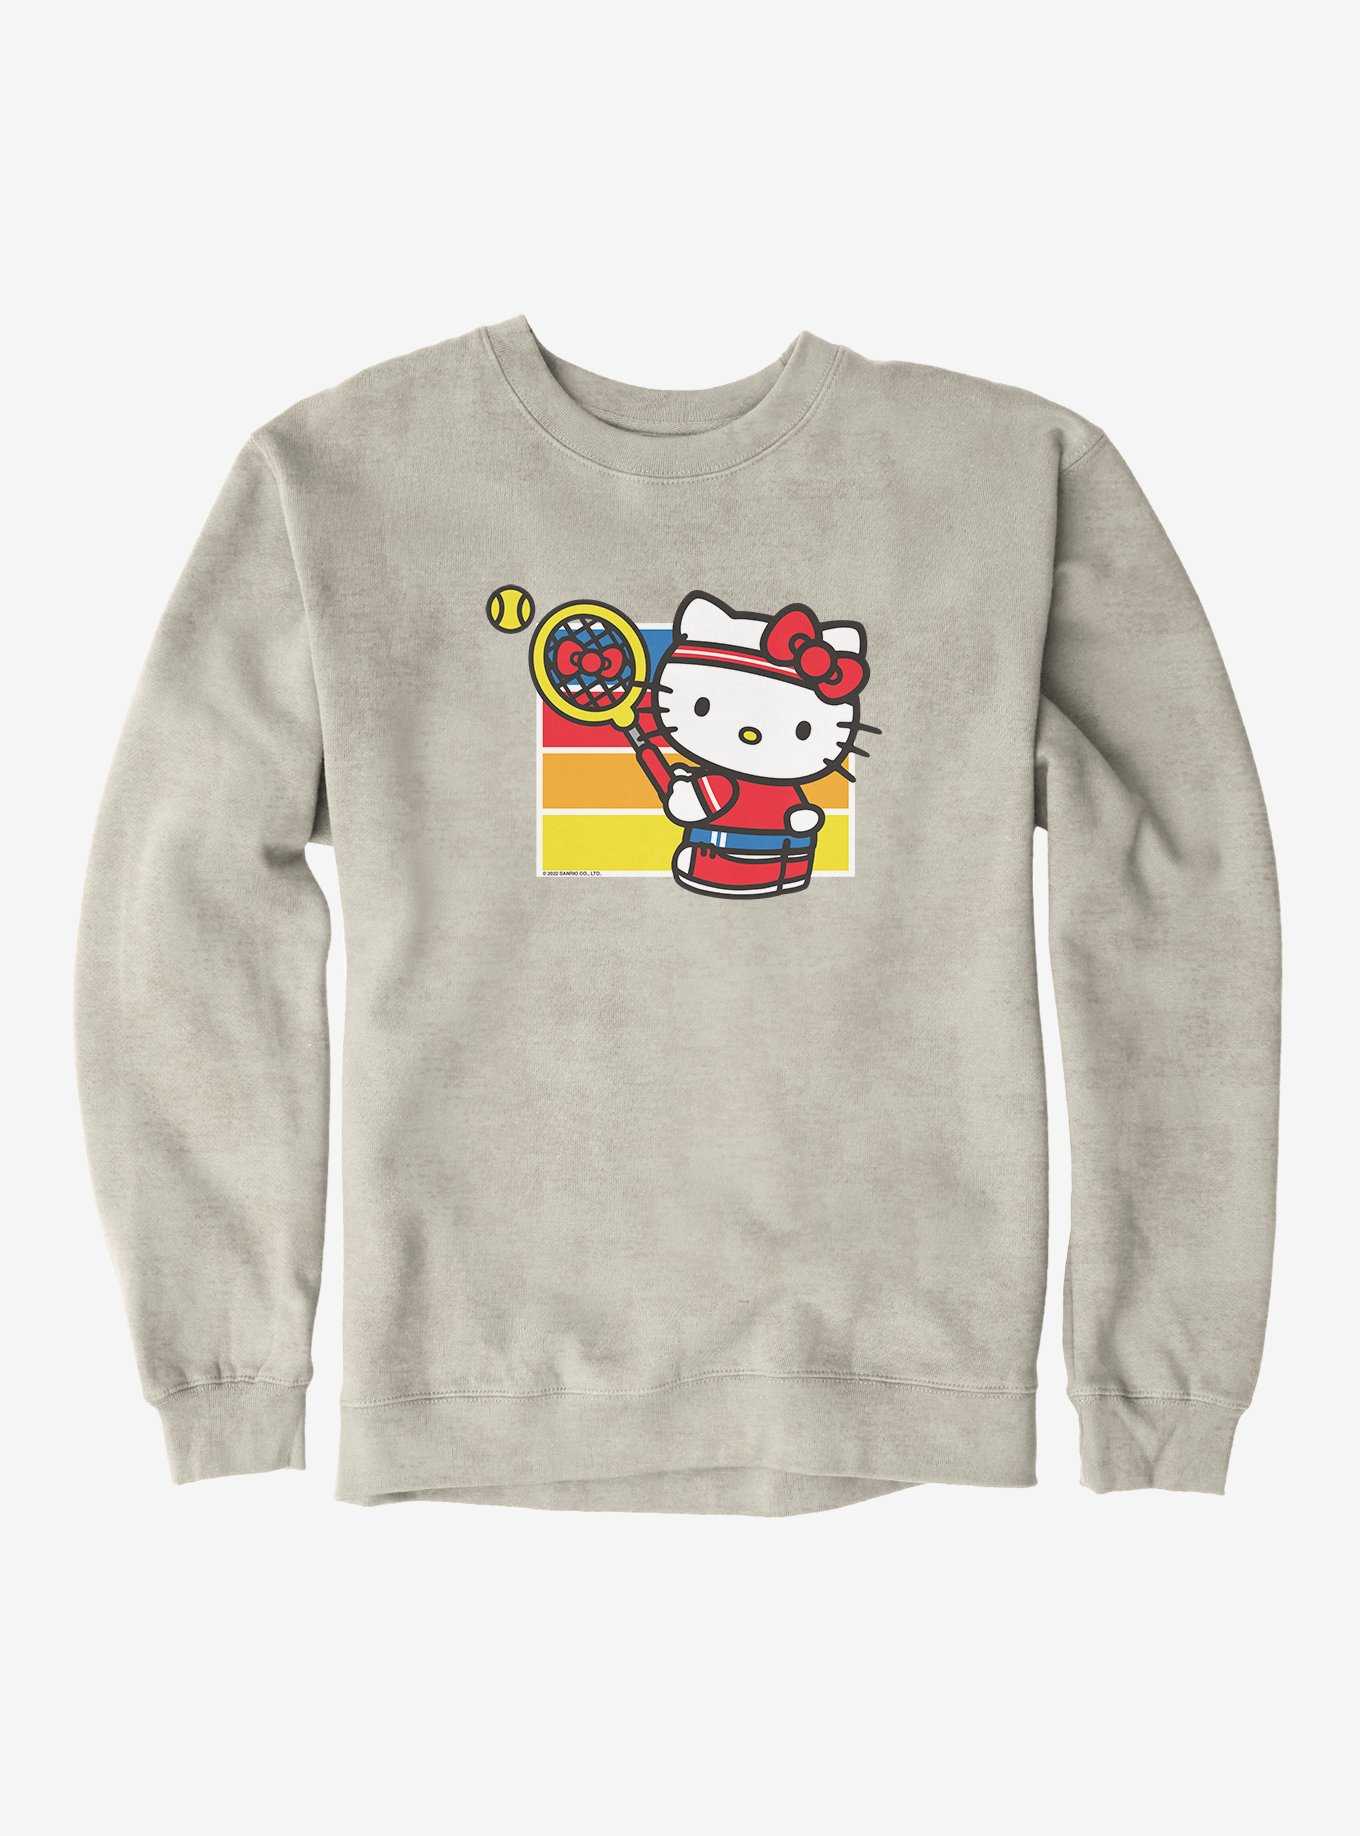 Hello Kitty Color Tennis Serve Sweatshirt, , hi-res